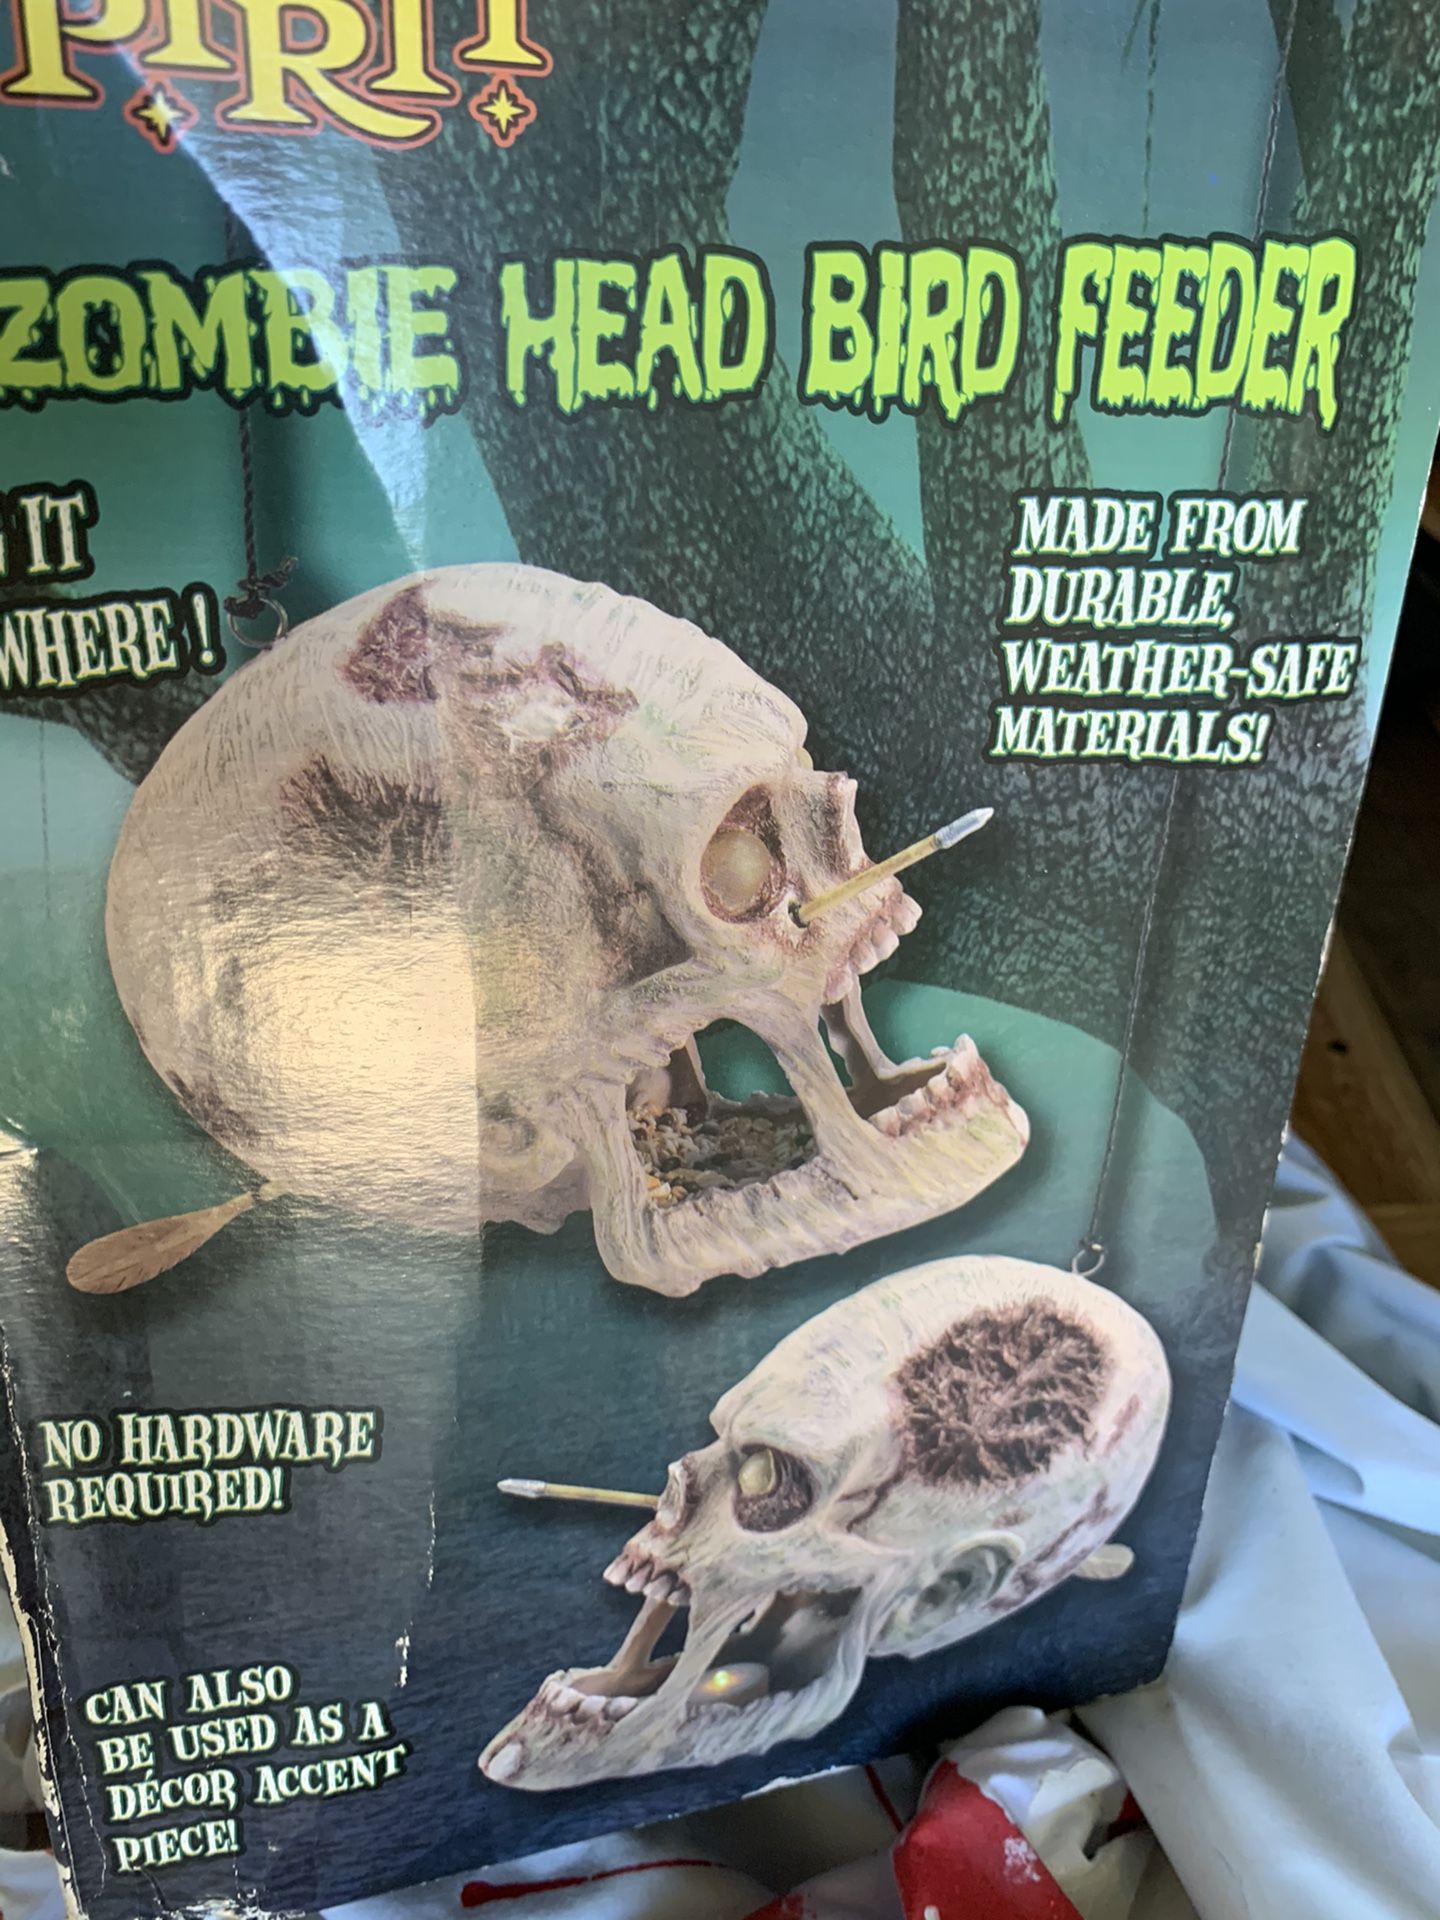 Zombie head bird feeder